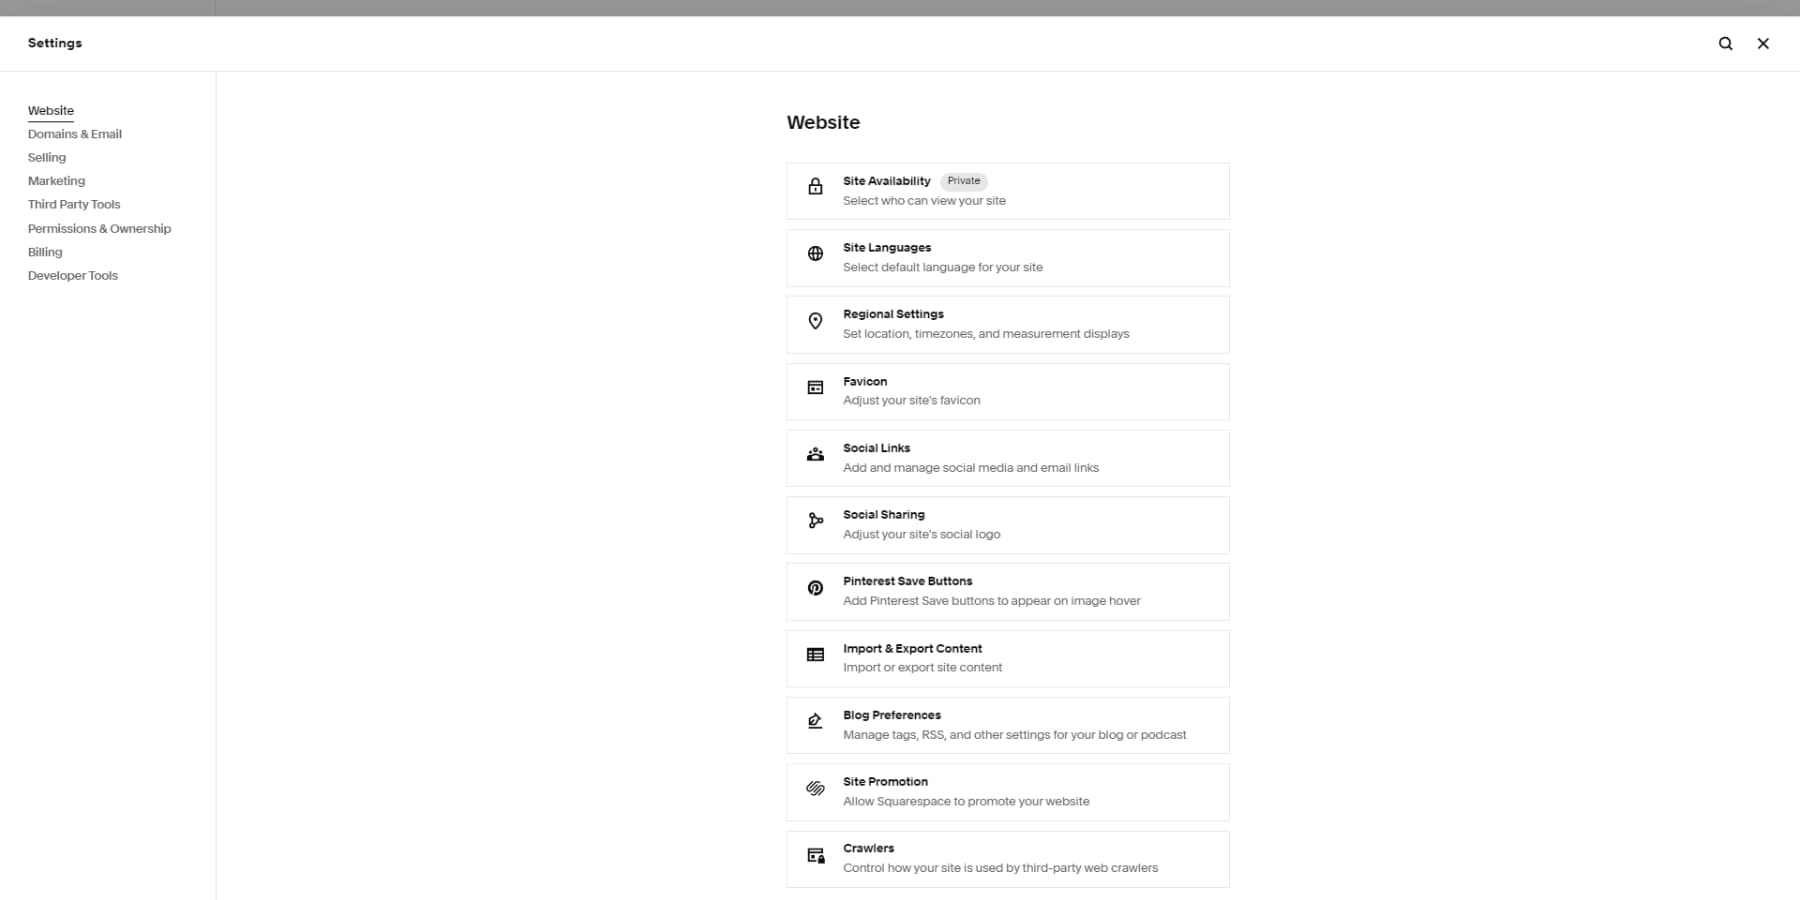 A screenshot of Squarespace's settings